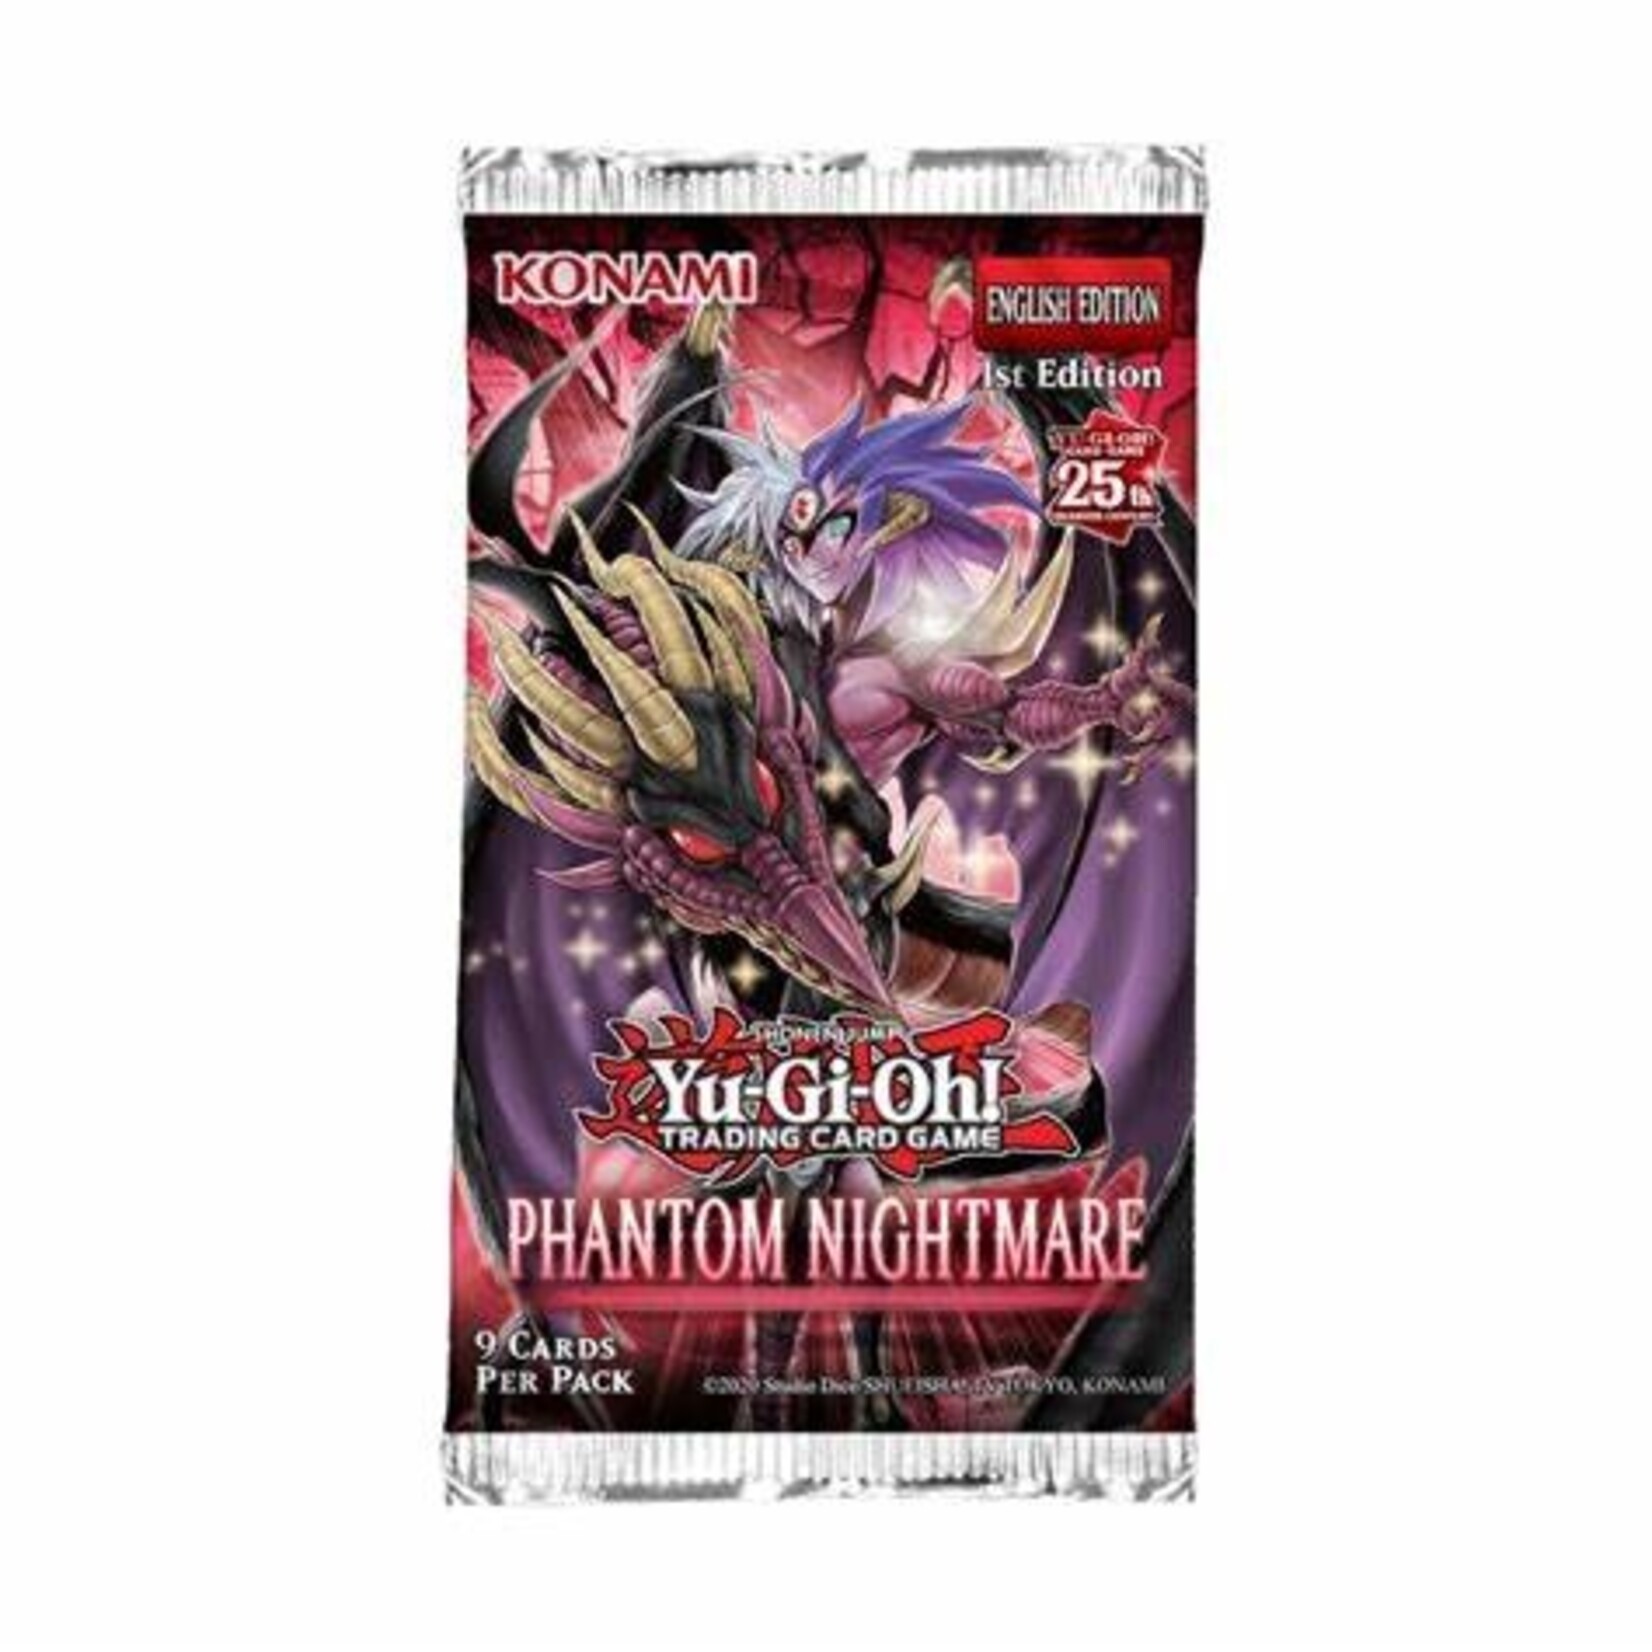 Ygo phantom nightmare booster